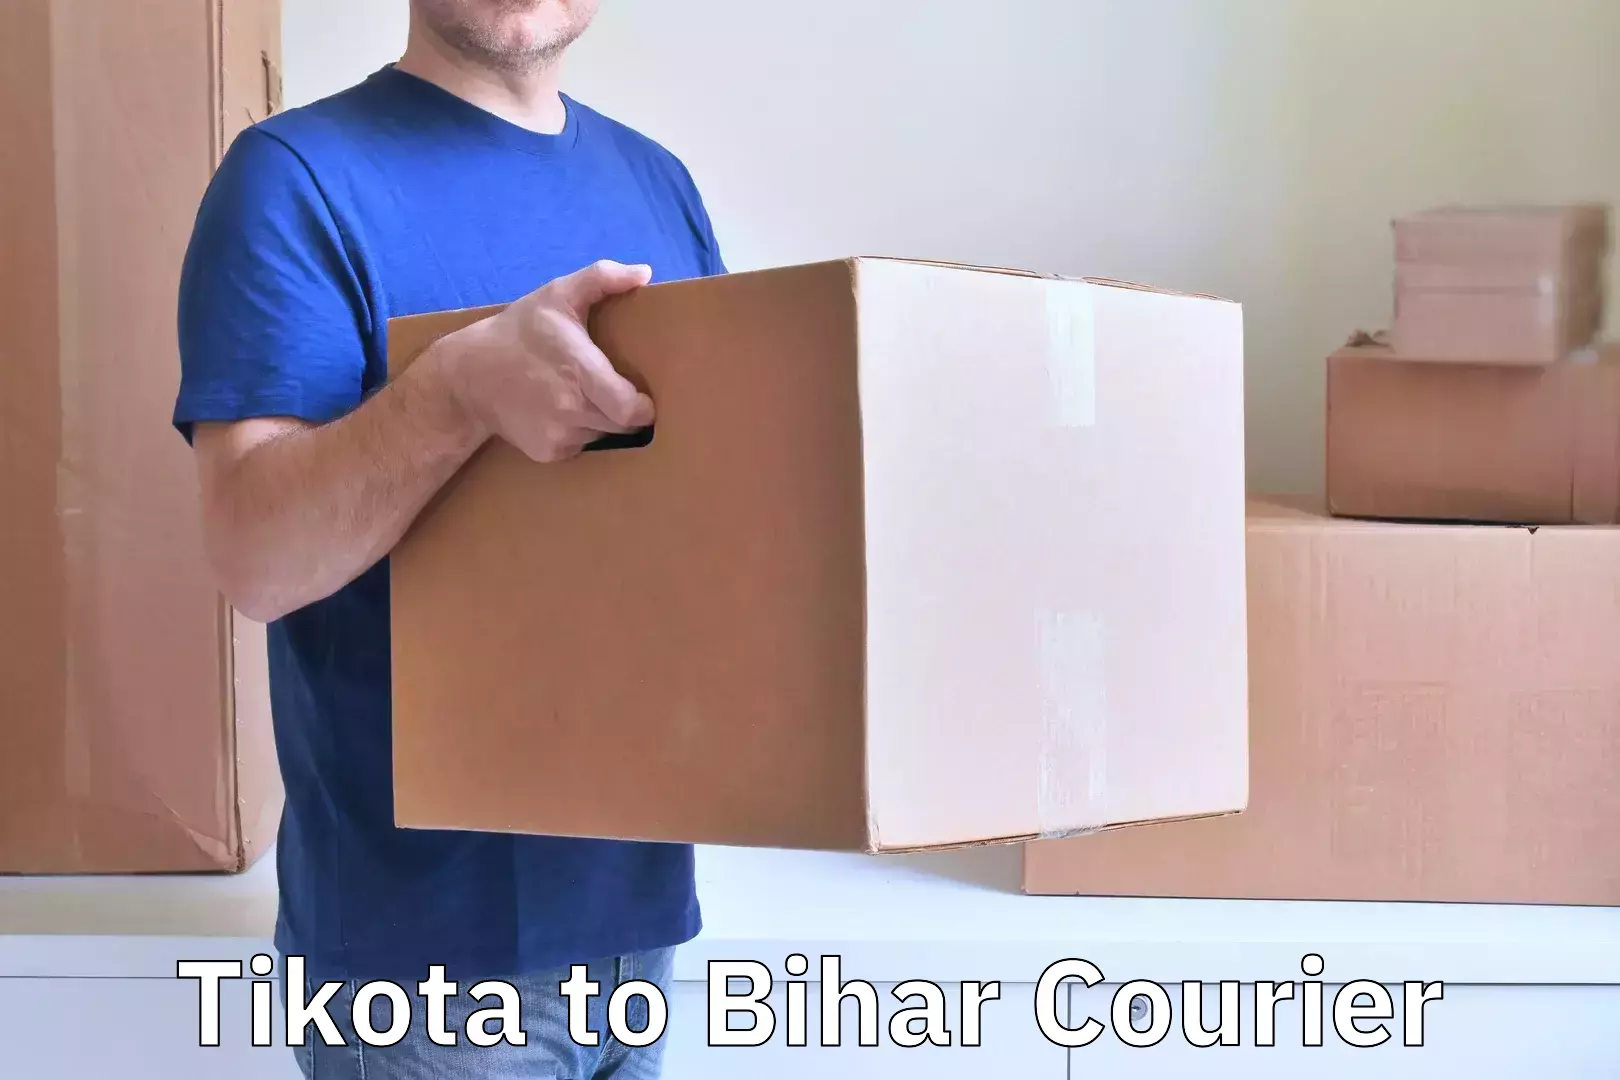 Luggage transfer service Tikota to Bihar